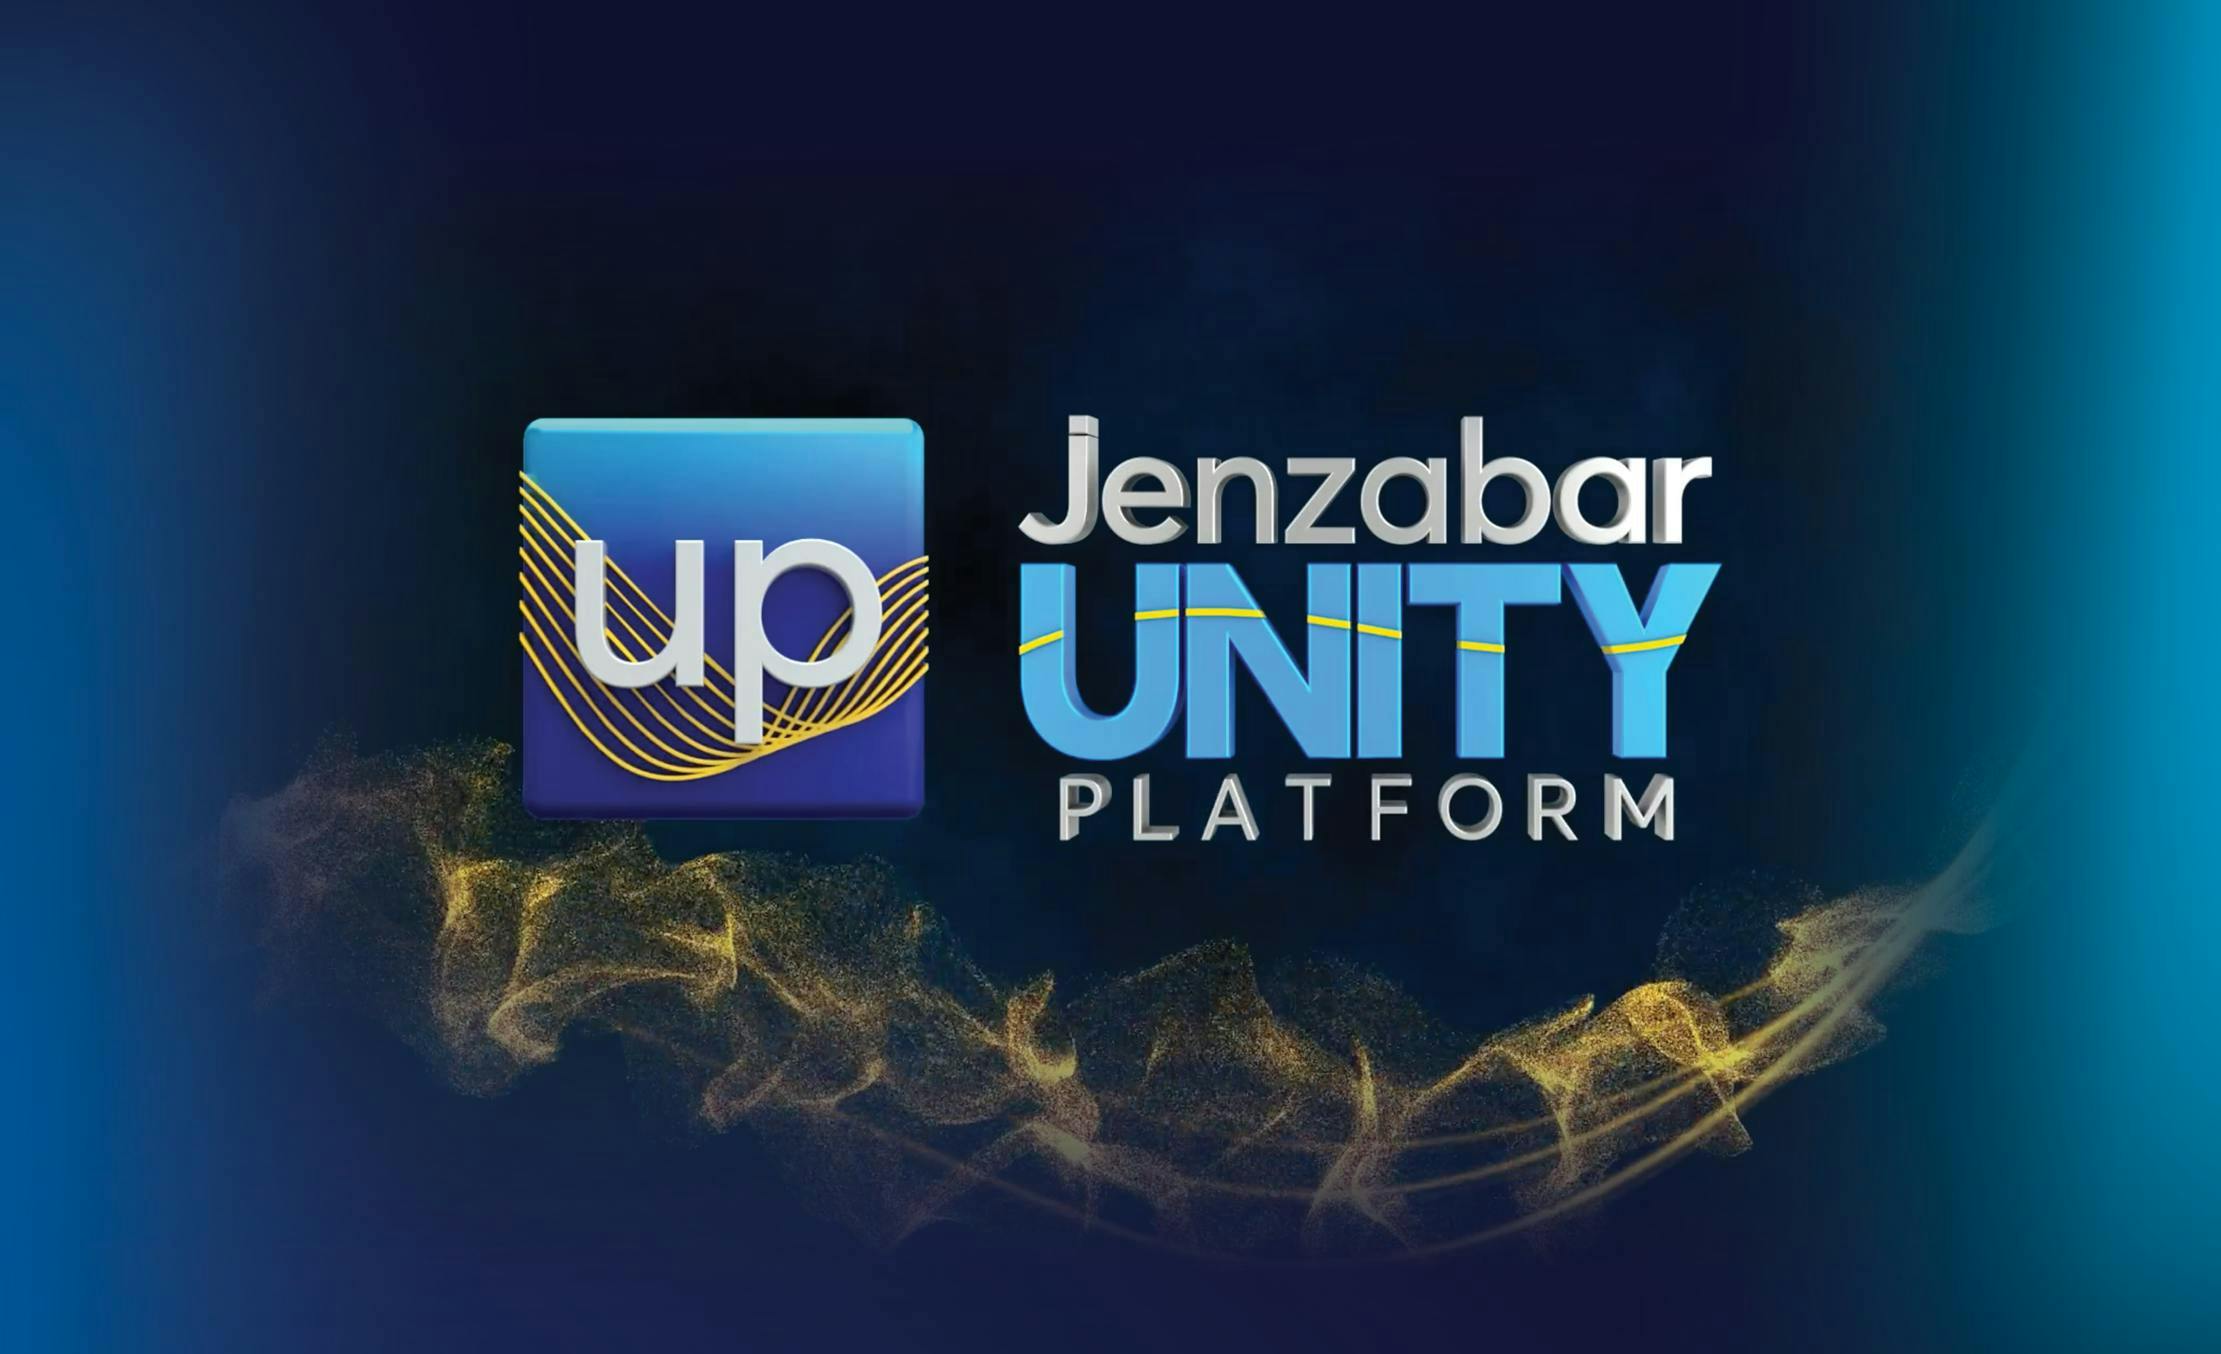 Video: Jenzabar Unity Platform Overview